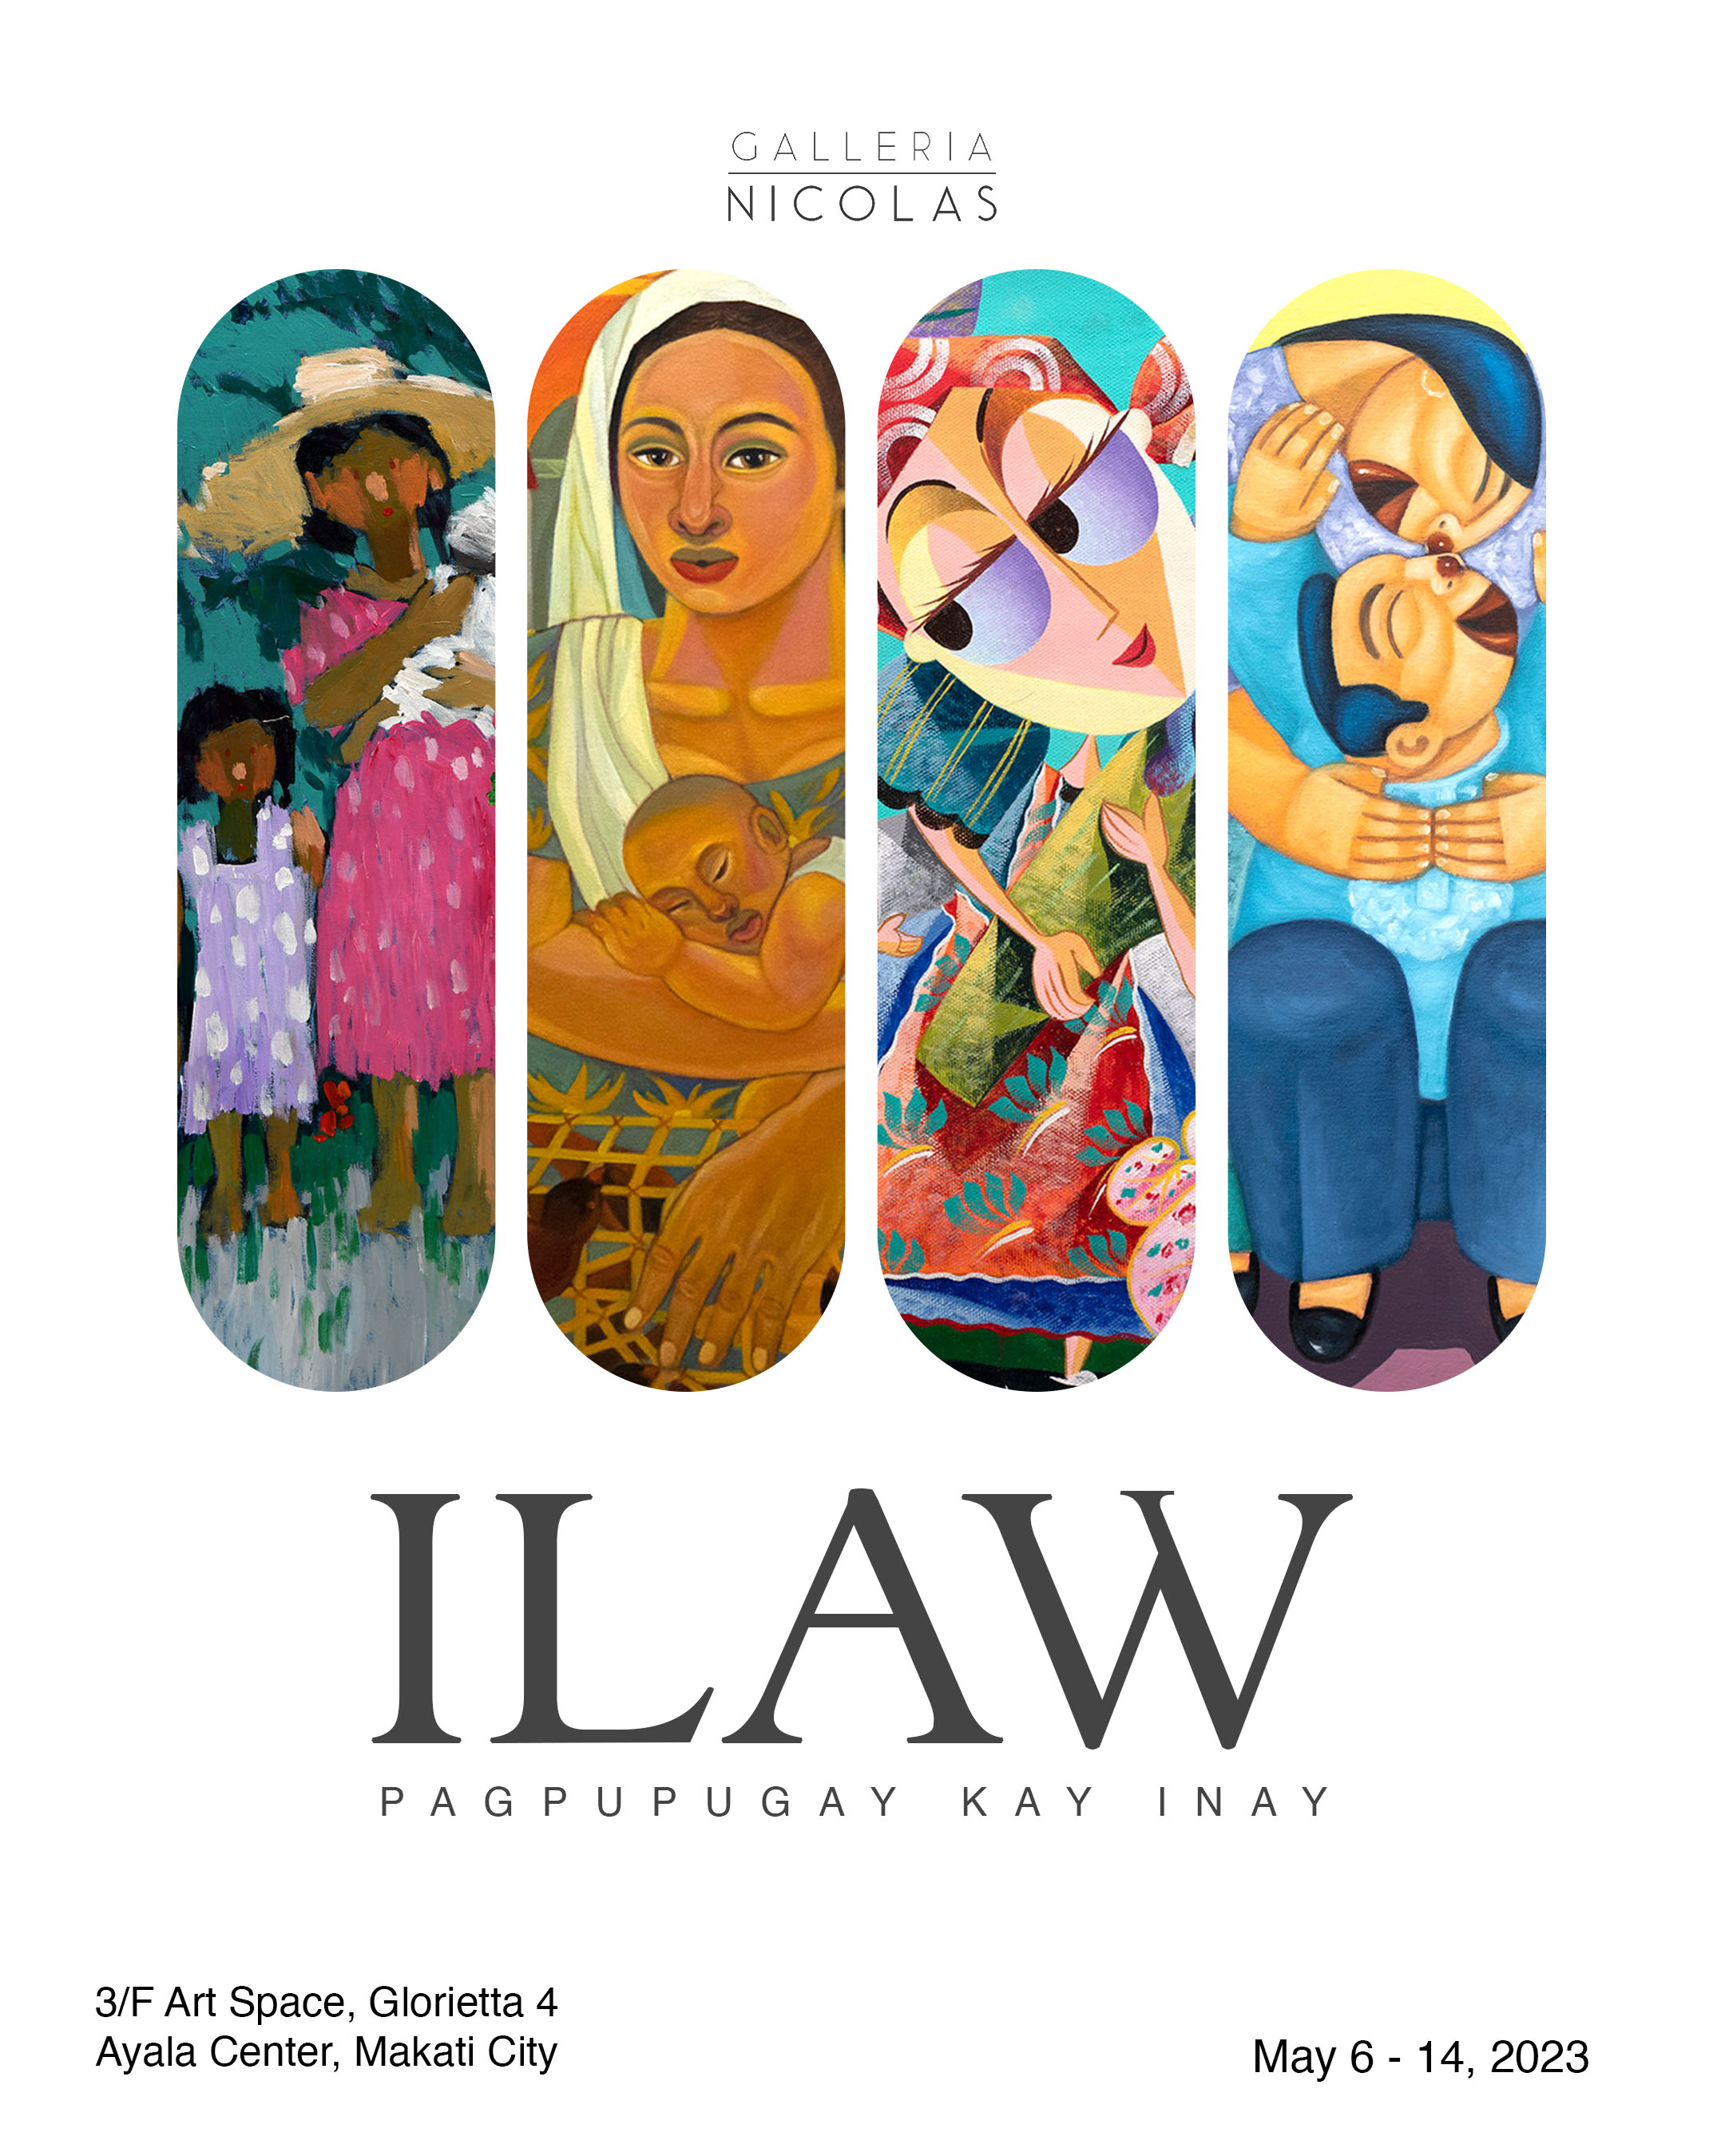 ILAW (Pagpugay kay Inay)